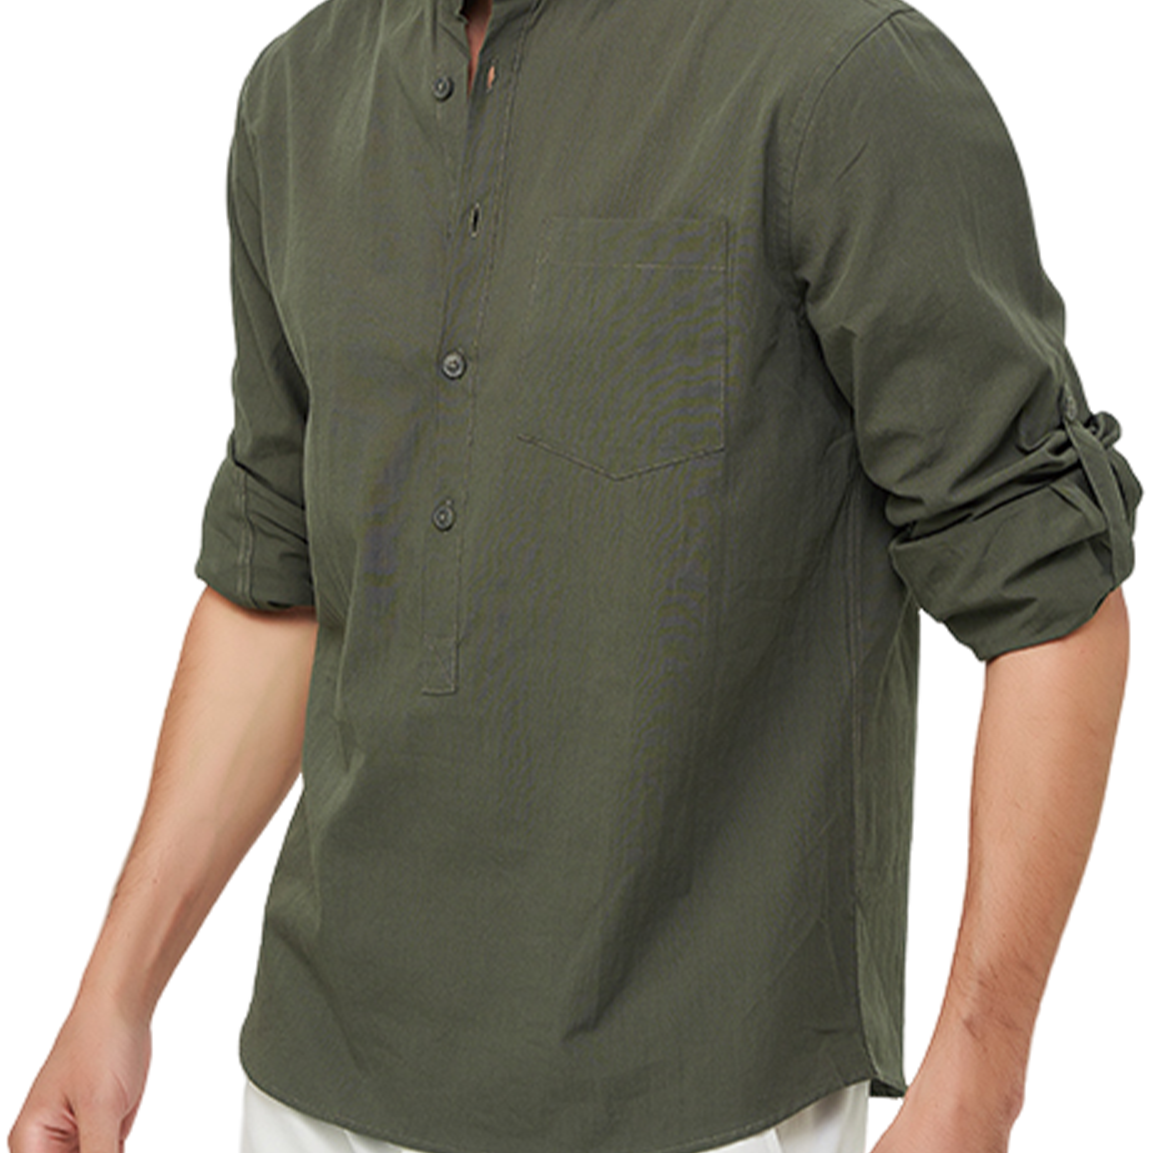 Men's Henley Collar Casual Solid Color Cotton Pocket Long Sleeve Shirt